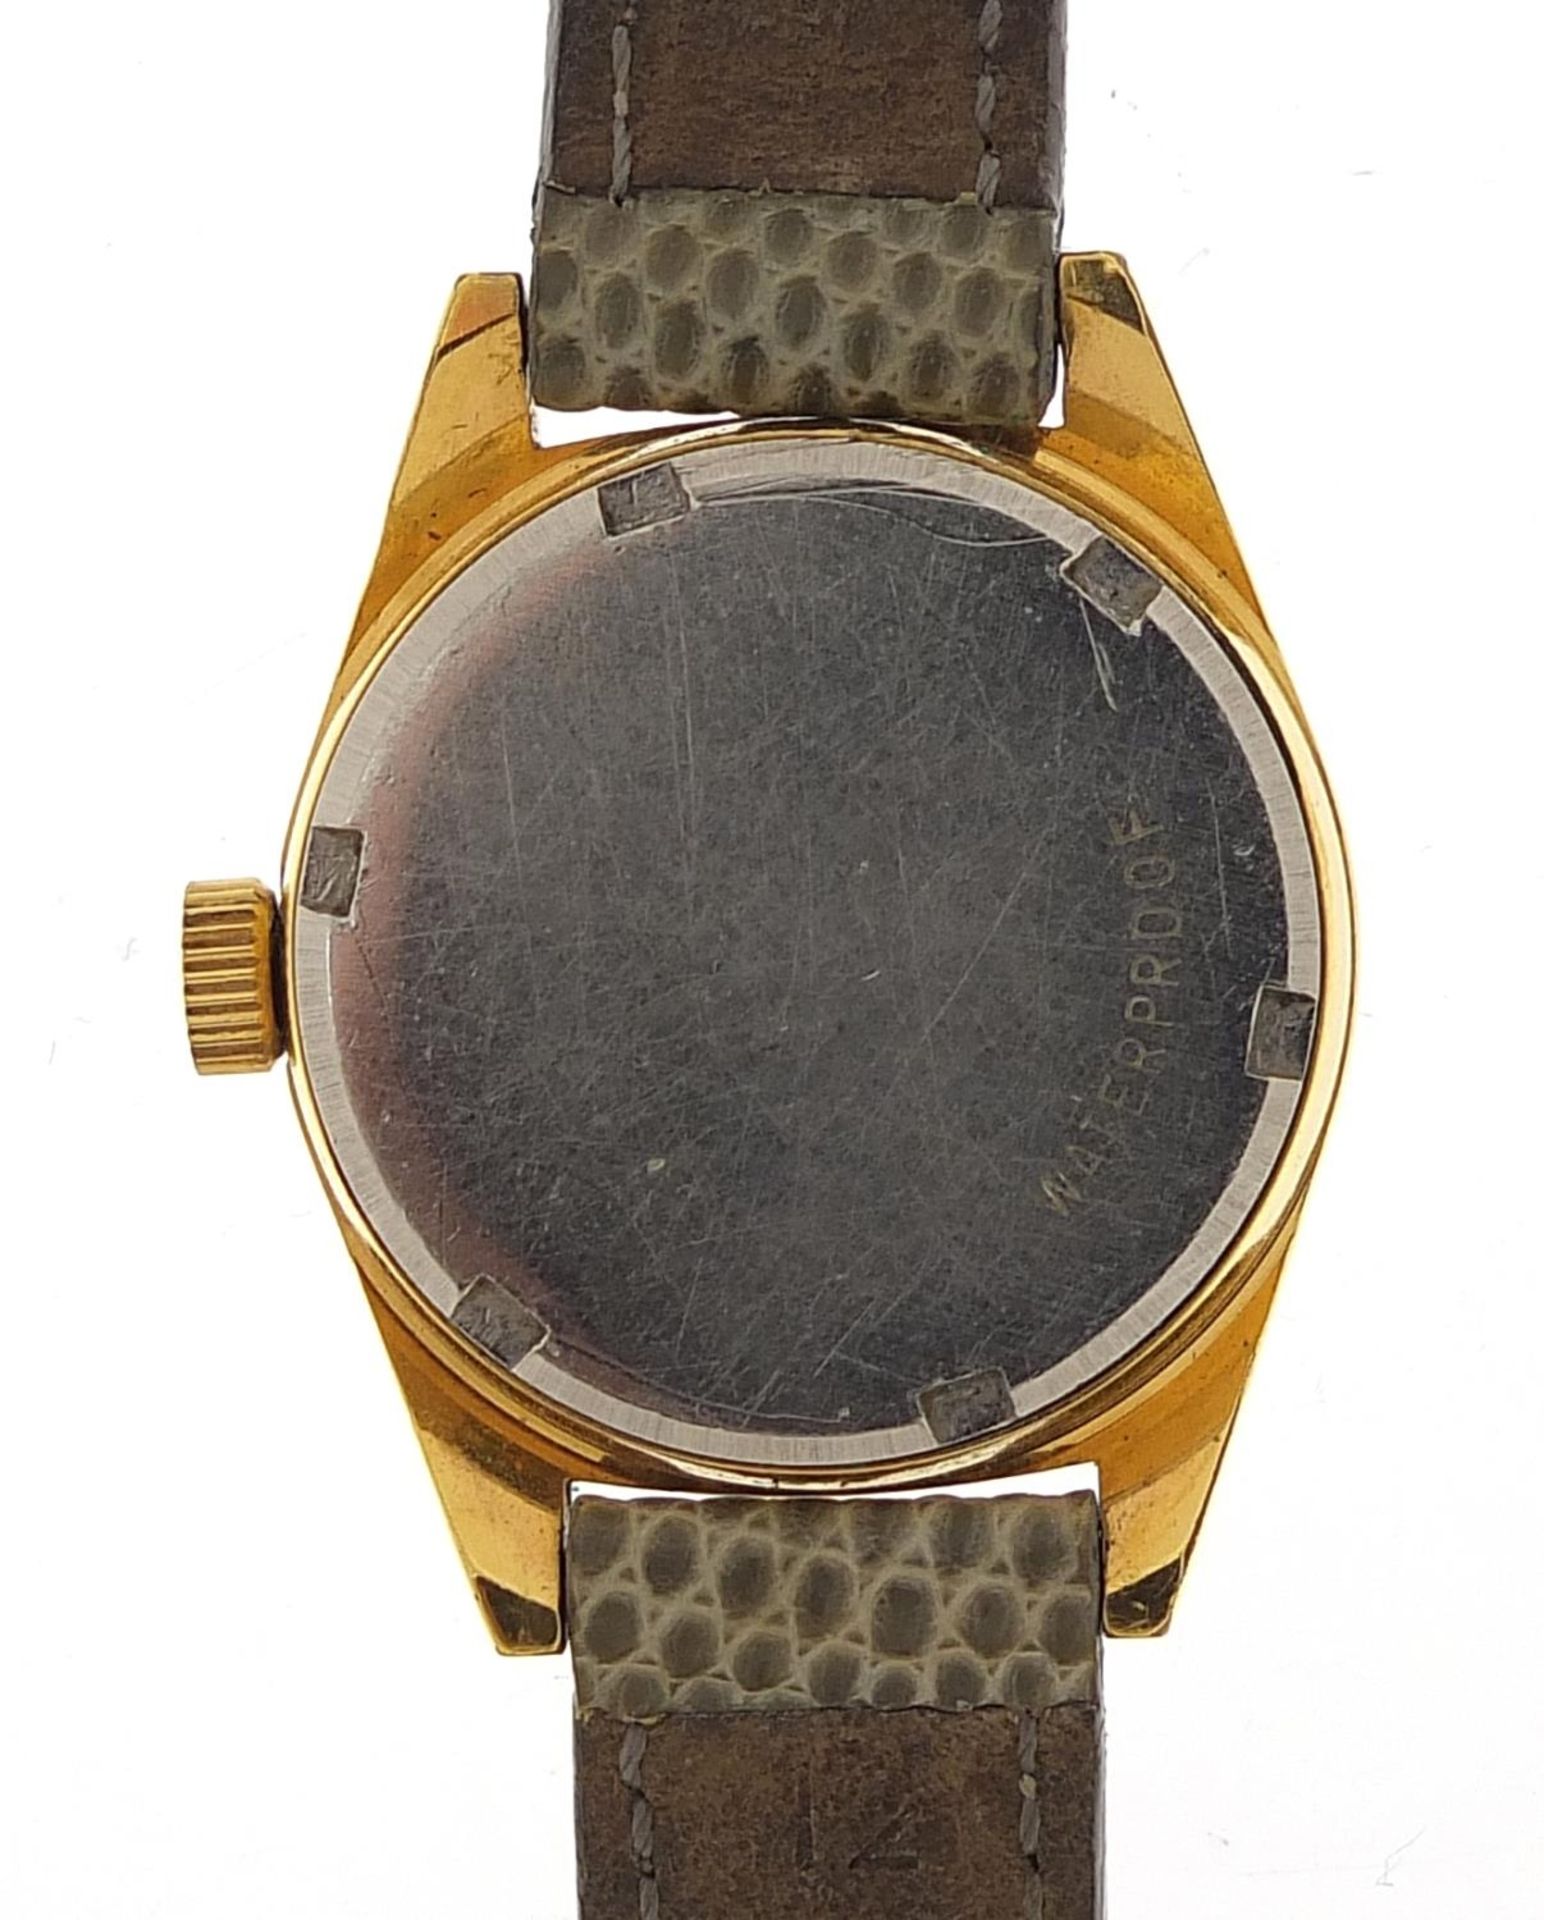 Omega, ladies Omega Geneve wristwatch, 24mm in diameter - Image 3 of 4